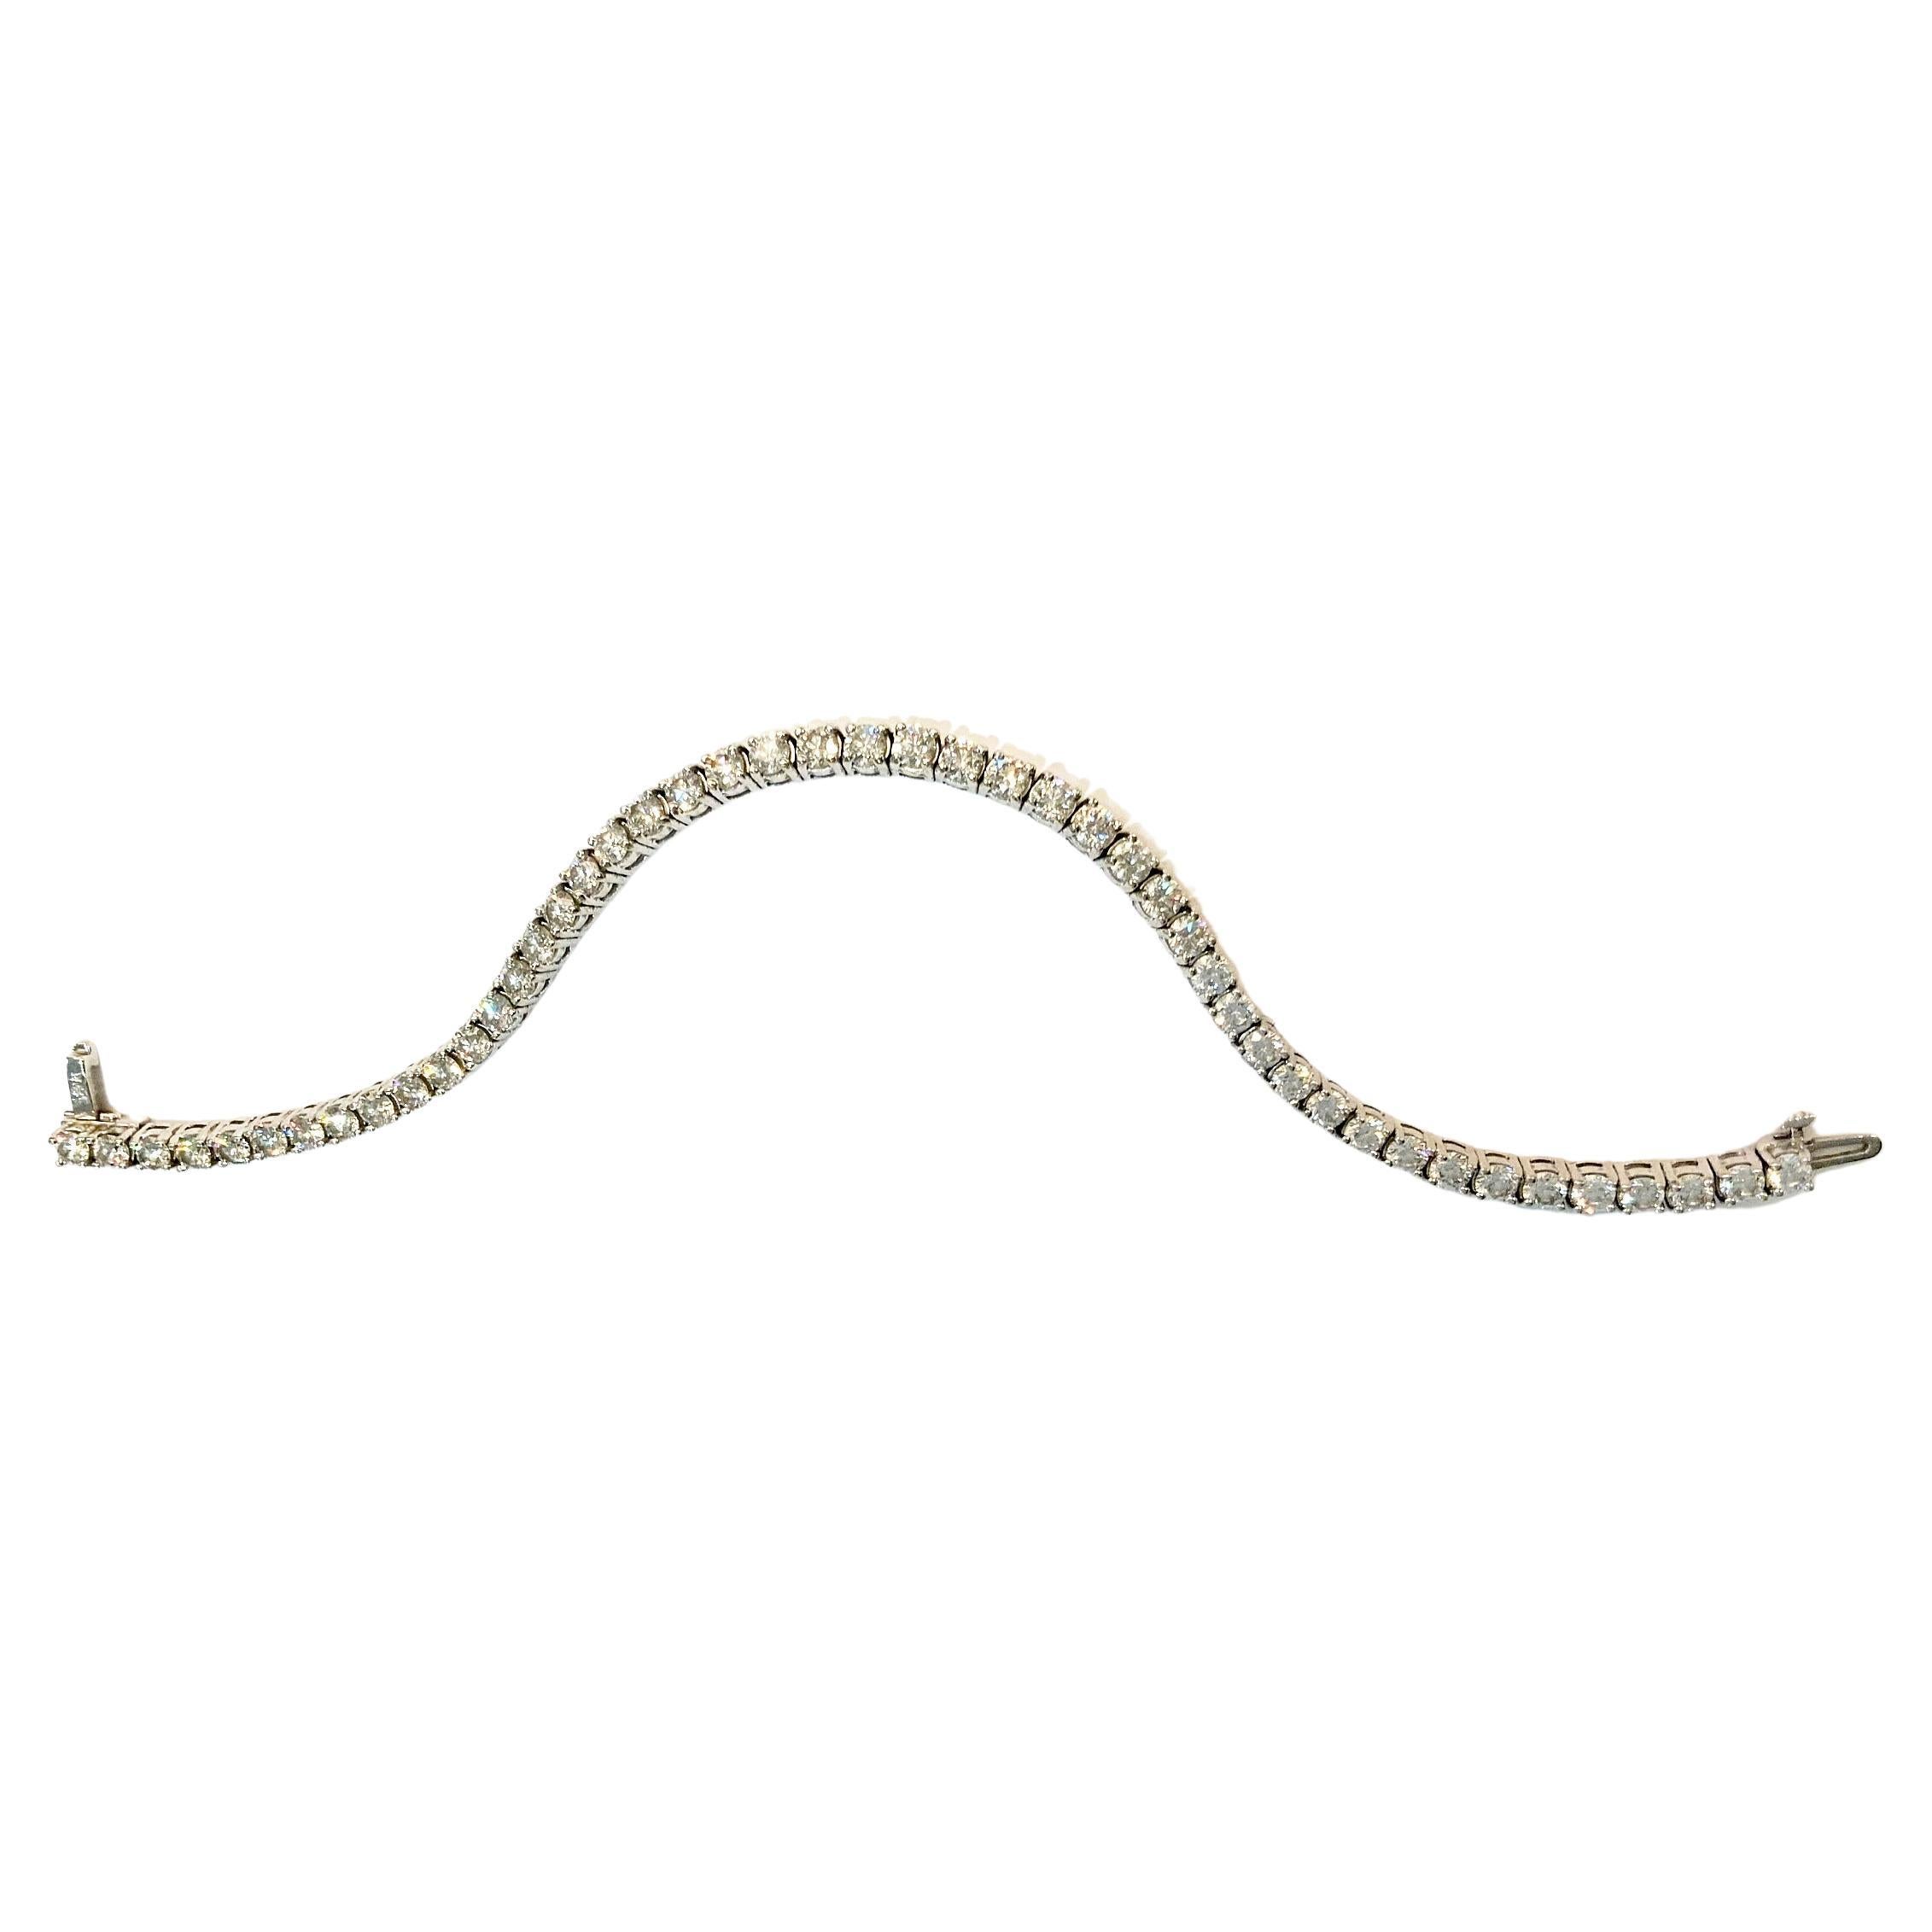 8.20 Carat Diamond VS2 White Gold Tennis Bracelet